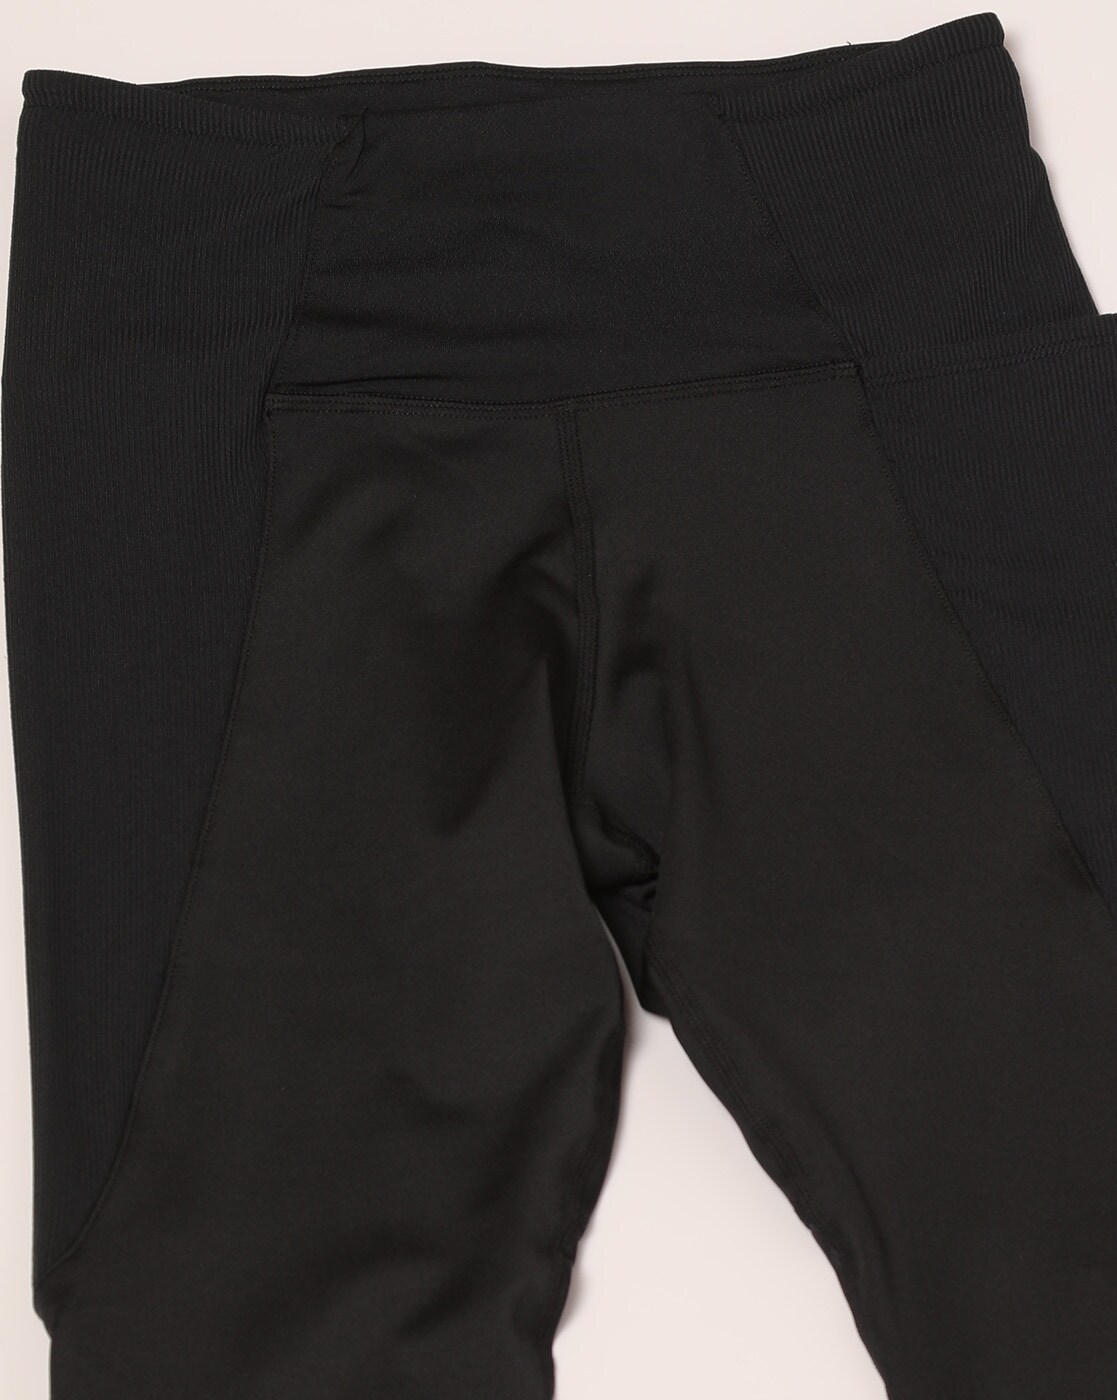 Black leggings with pockets | Clothes design, Black leggings, Fashion